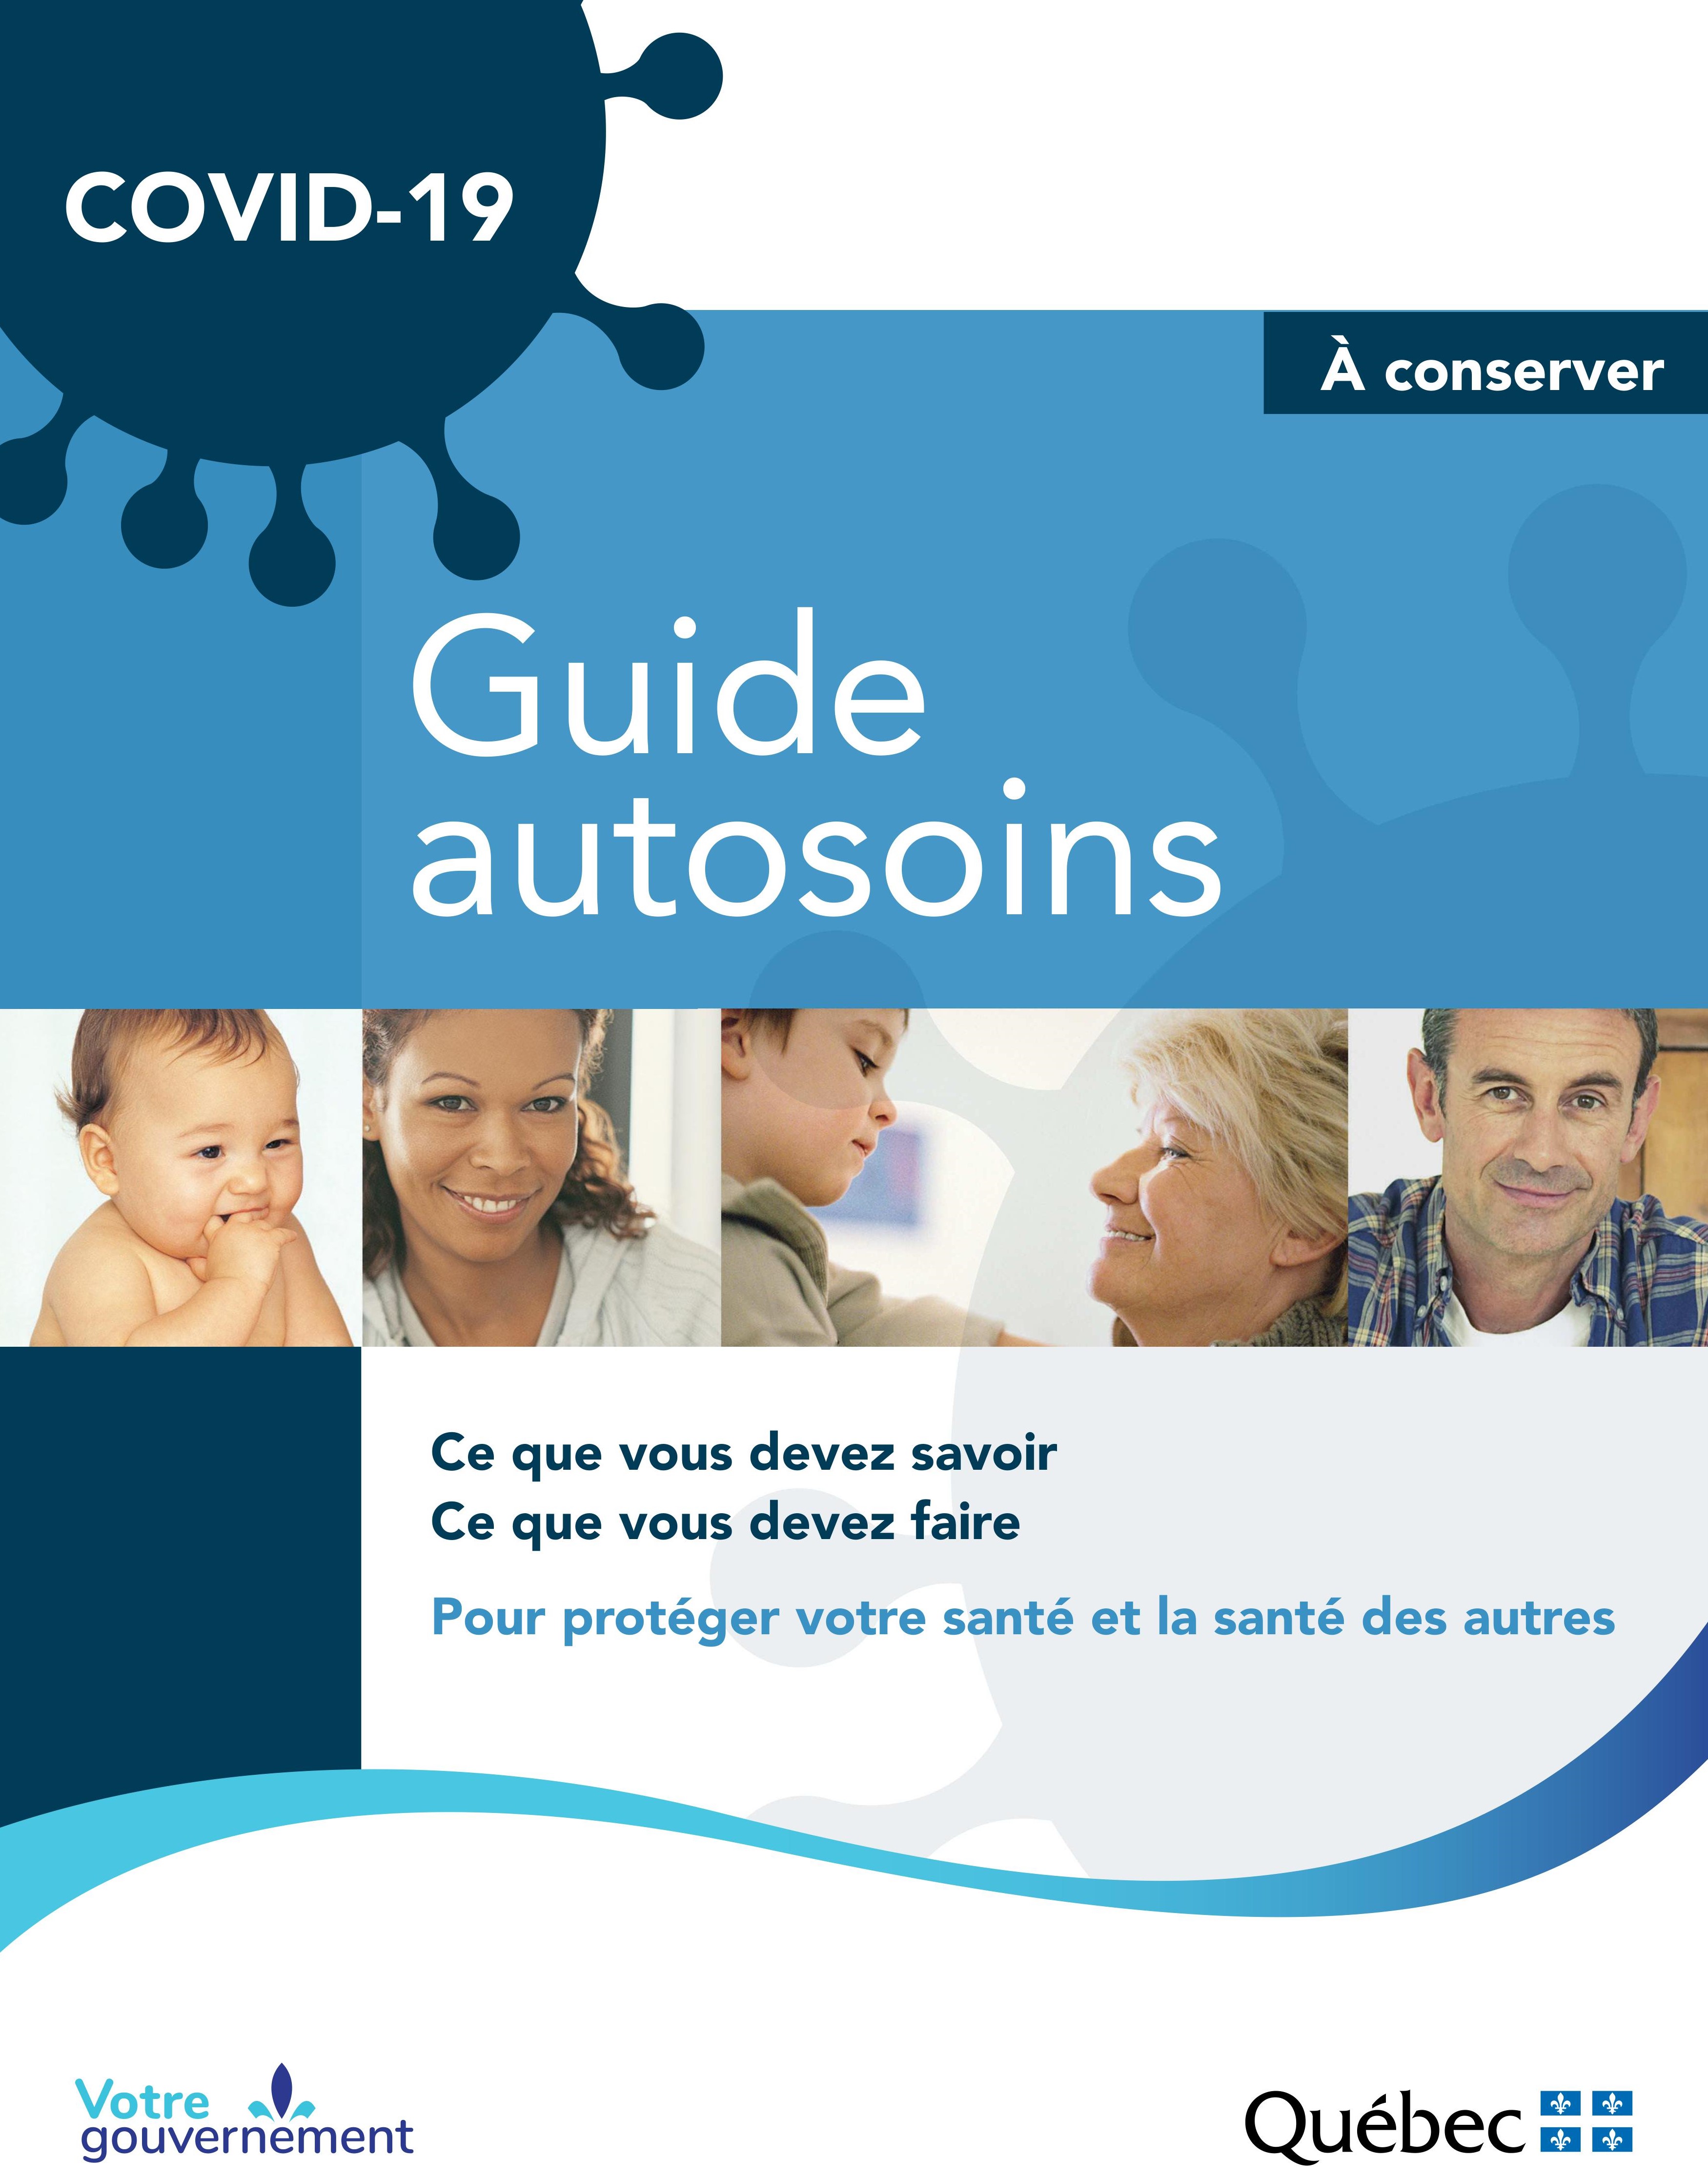 Image Guide autosoins Coronavirus